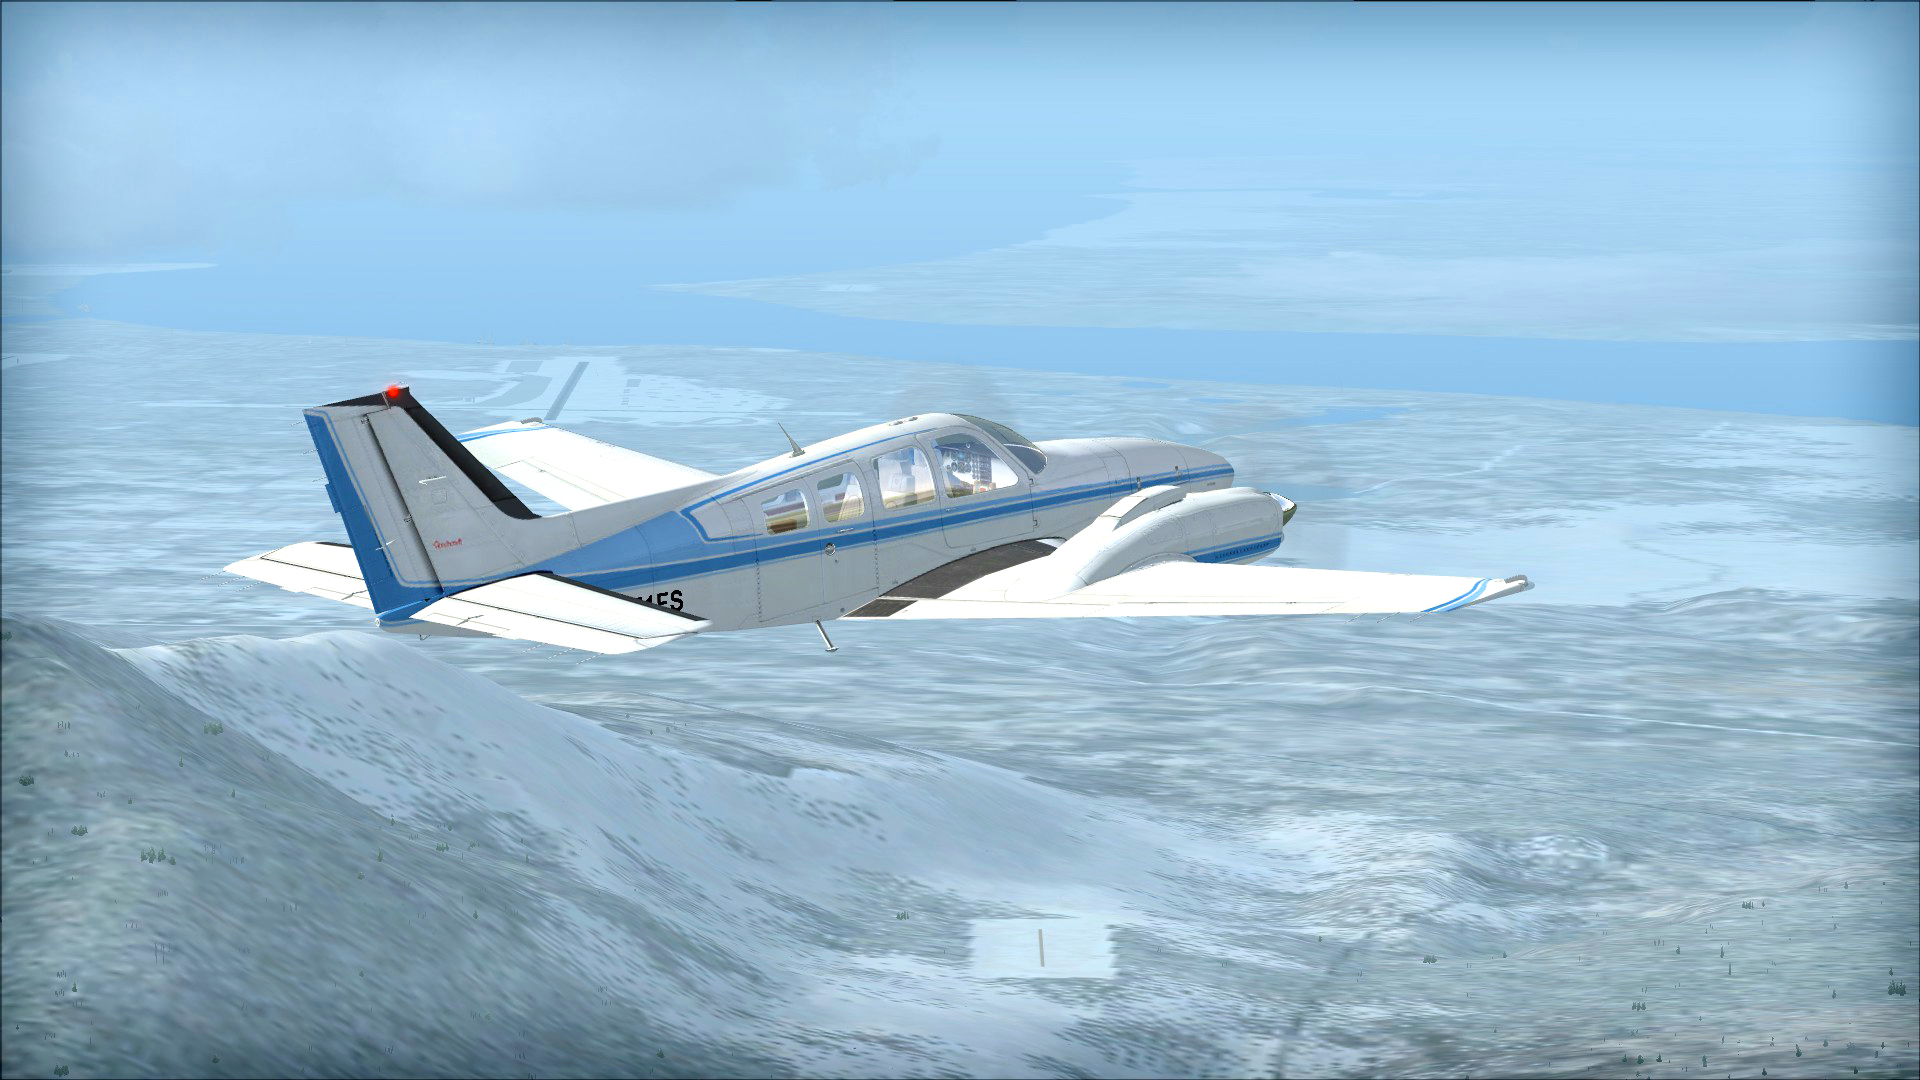 FSX: Steam Edition - Air Alaska Add-On screenshot